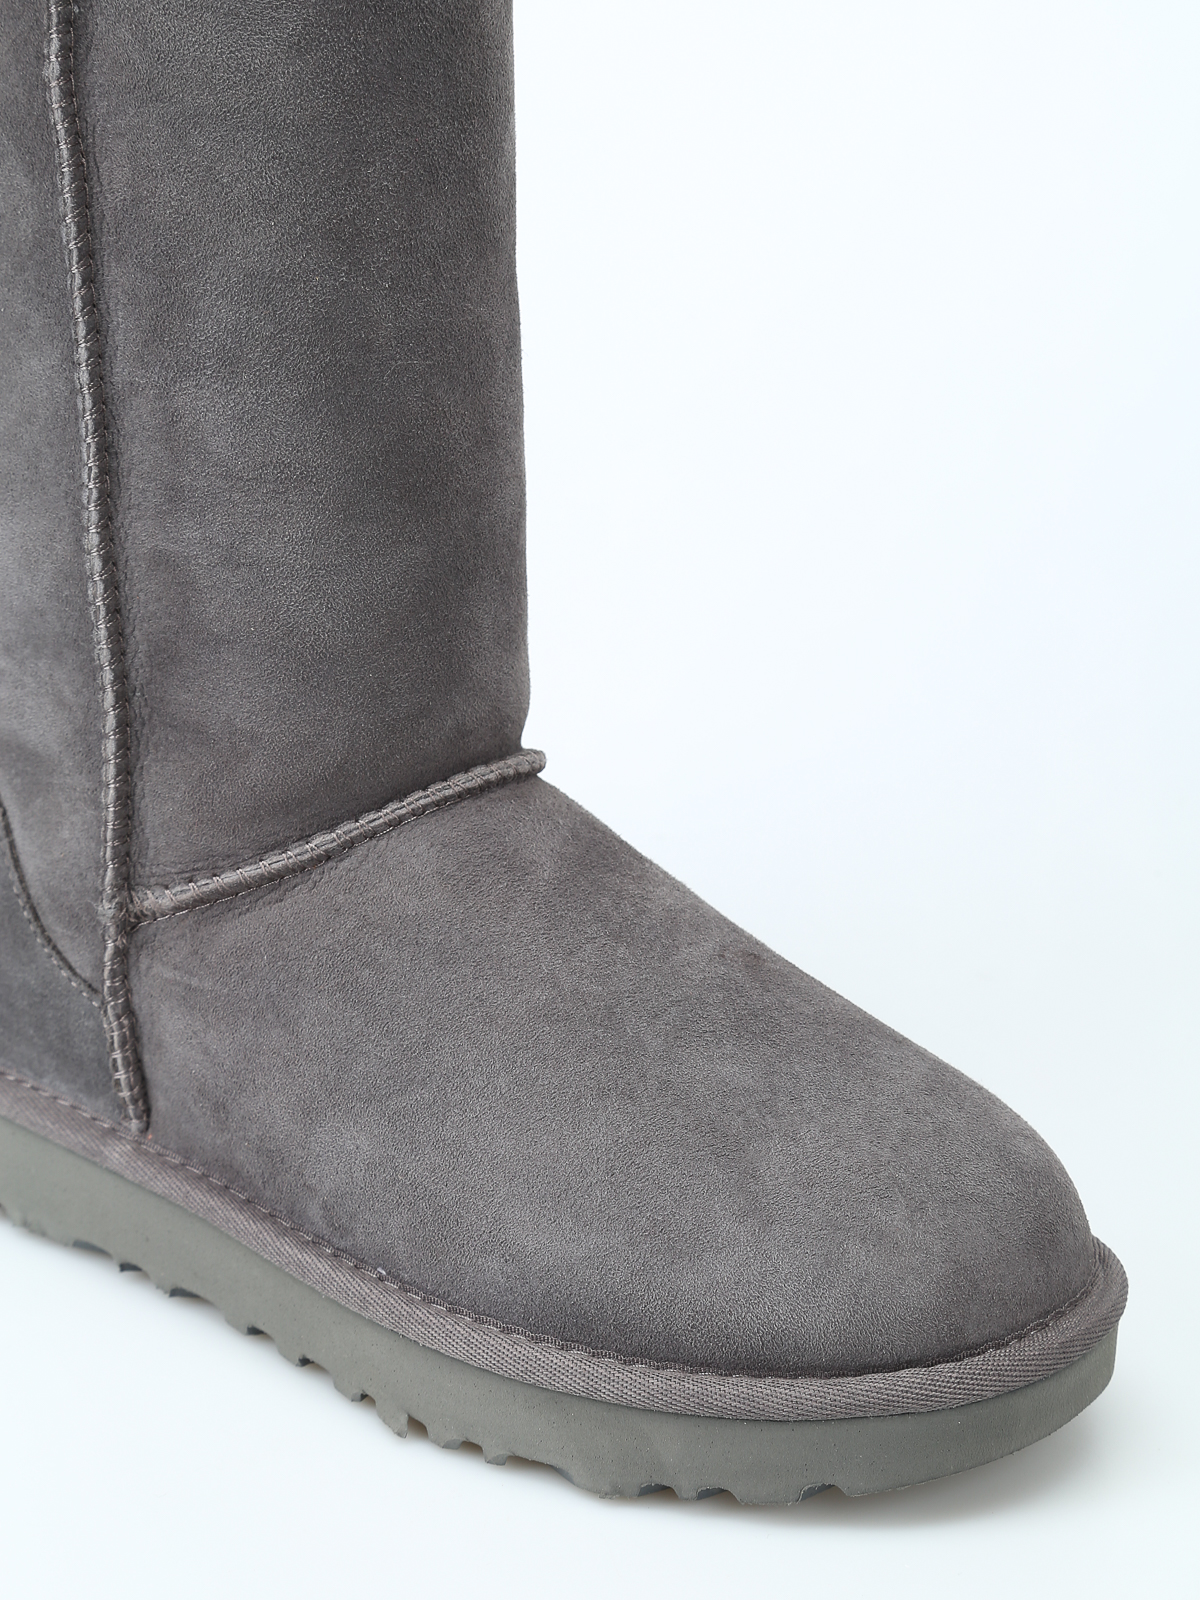 grey fur ugg boots